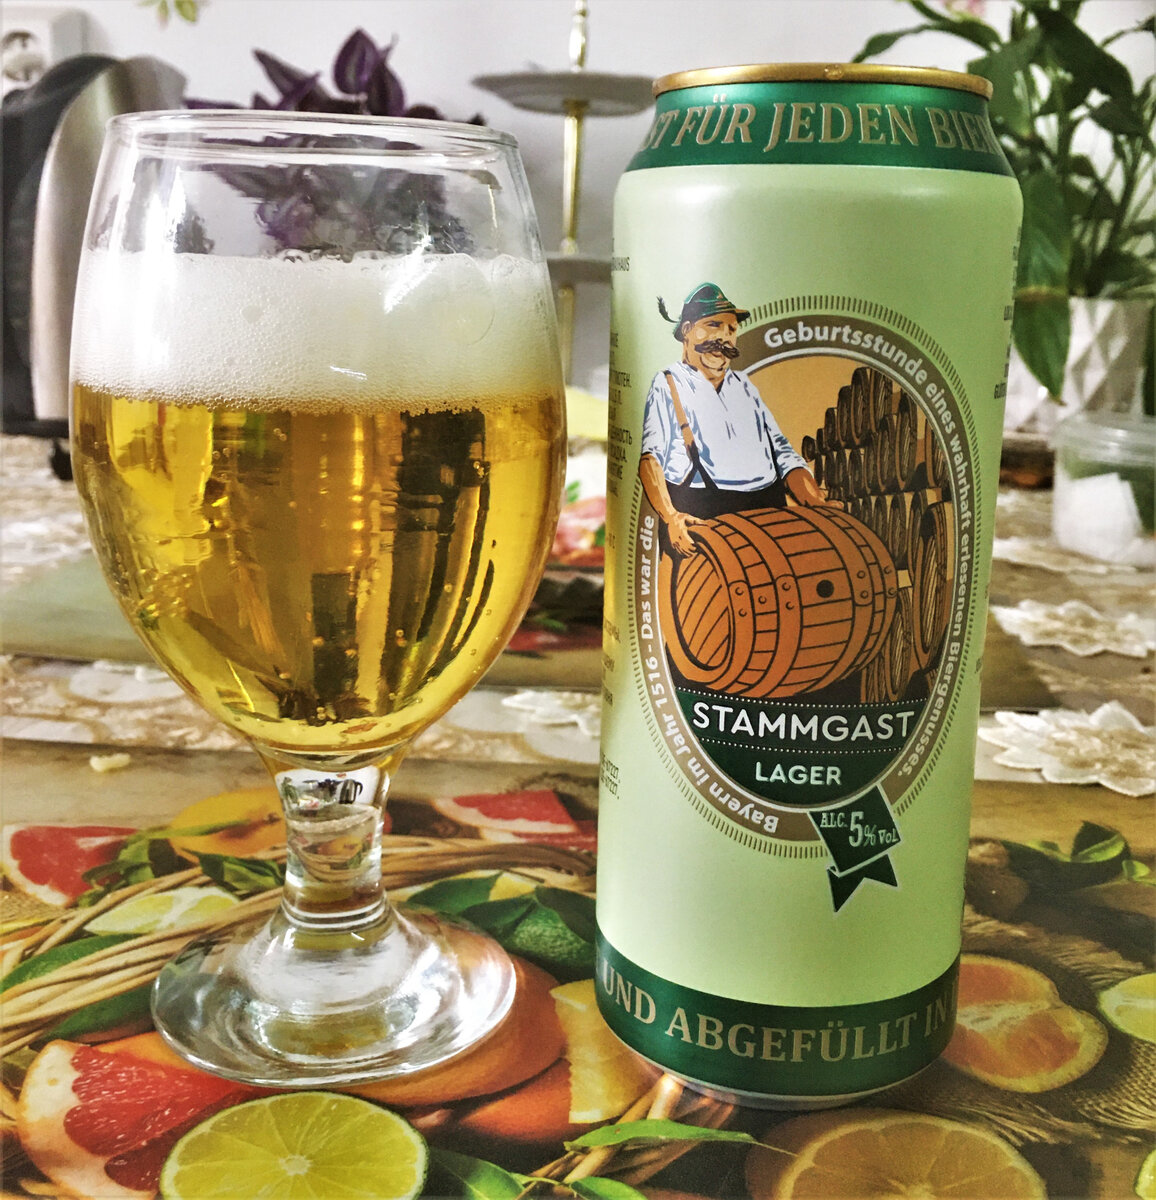 Lager beer. Stammgast Lager пиво. Пиво Stammgast Lager 5%. Пиво Штаммгаст Голд. Пиво Фельденштайнер лагер.